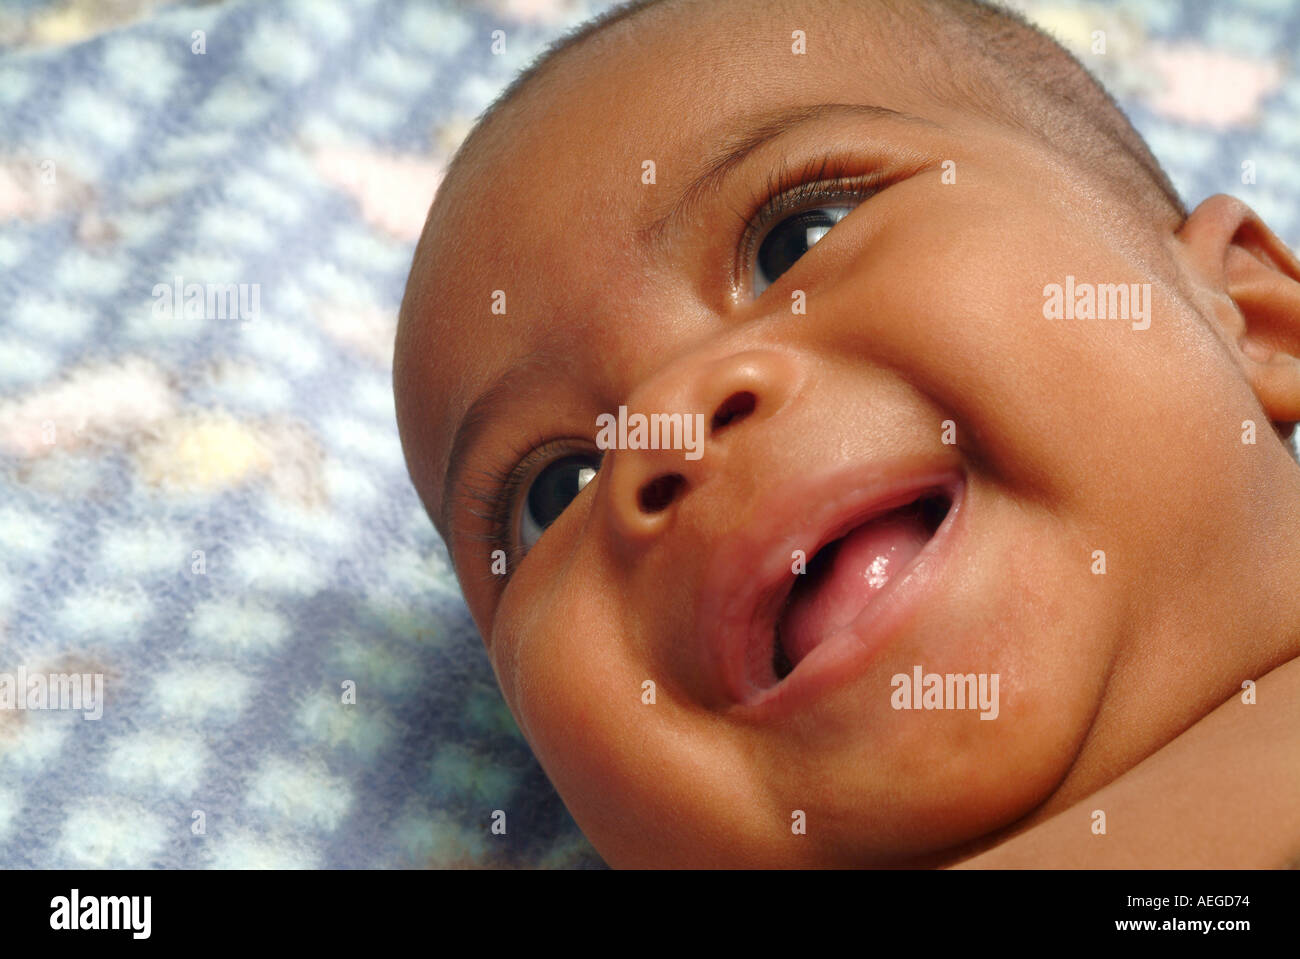 Baby s mondo ying little black sorridendo felice felicità persona persone kid bambino baby Foto Stock